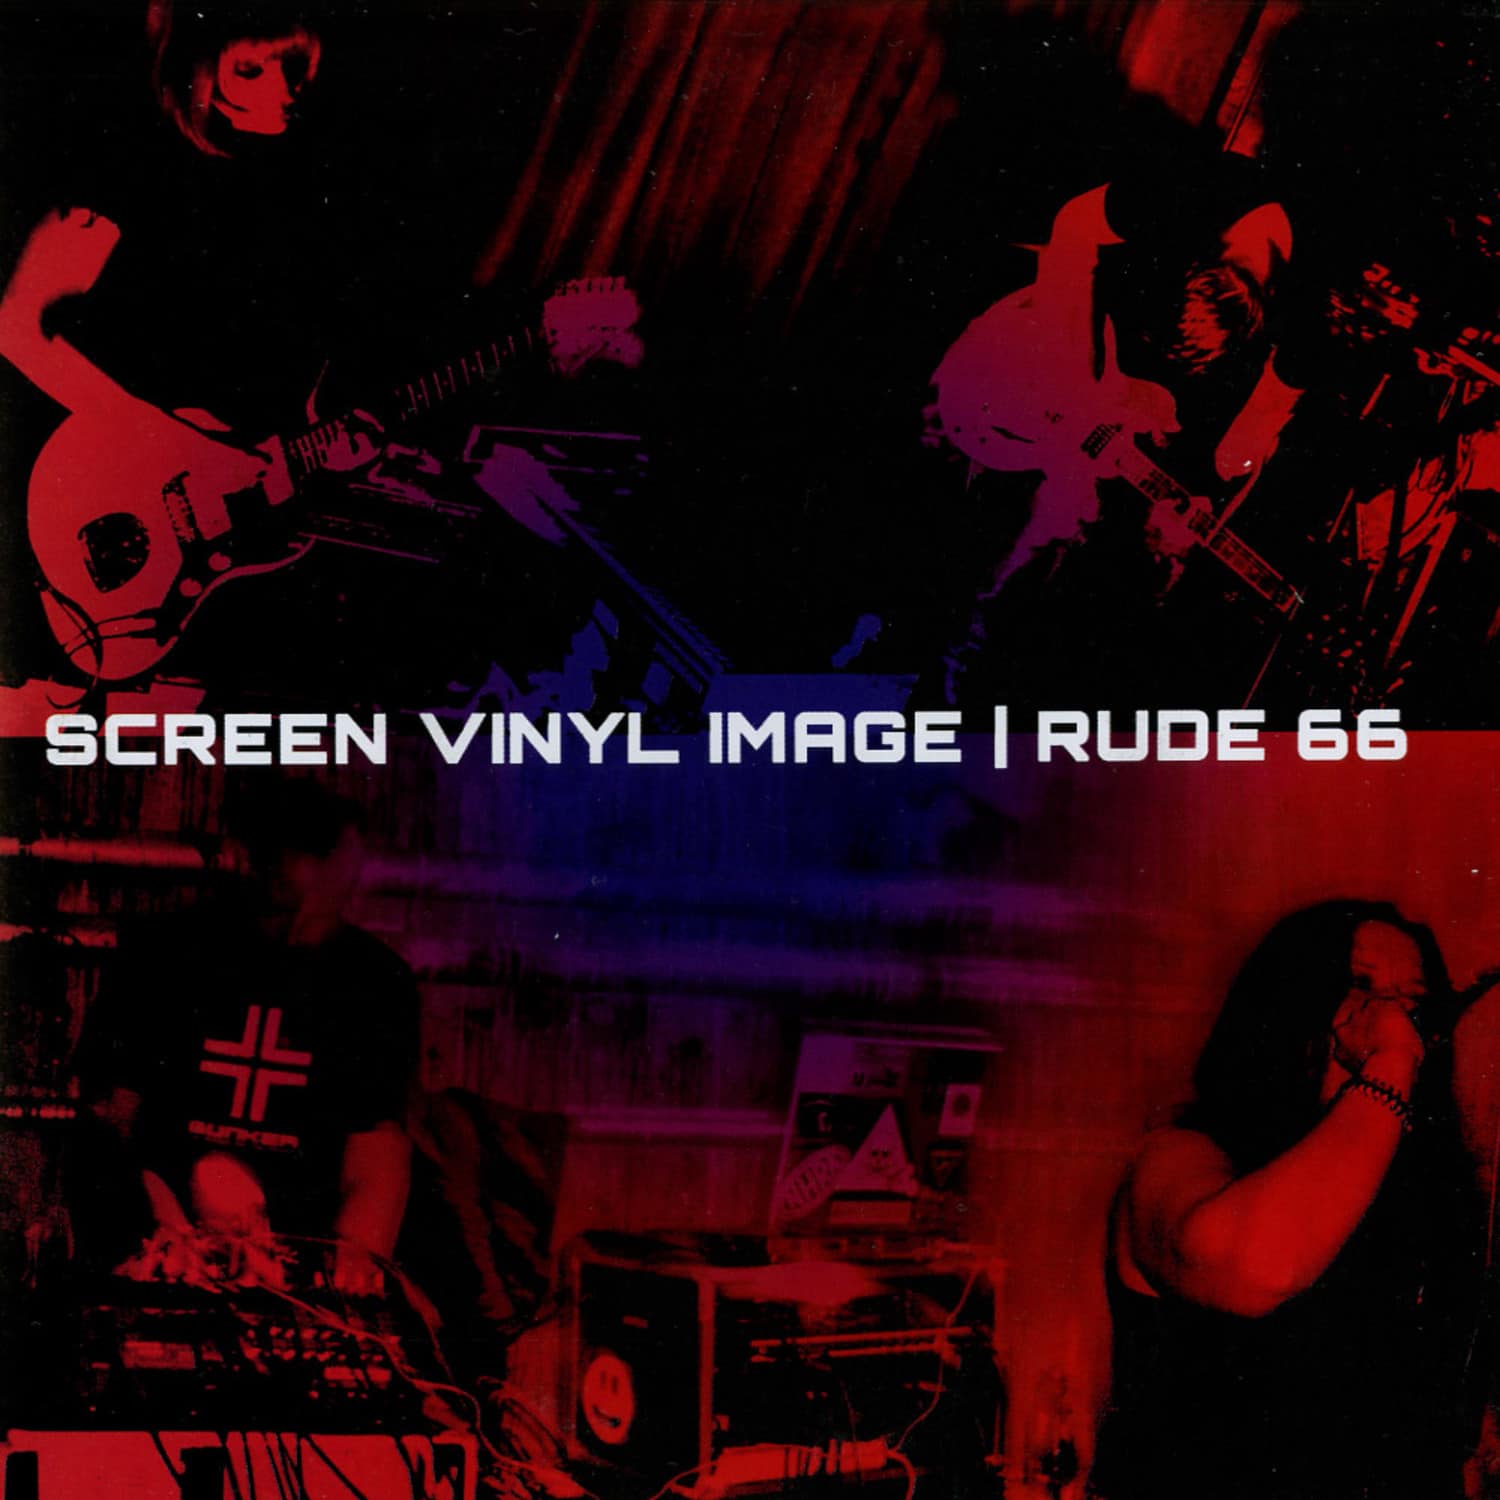 Rude 66 / Screen Vinyl Image - I AM GOD / TOMORROW IS TOO FAR 